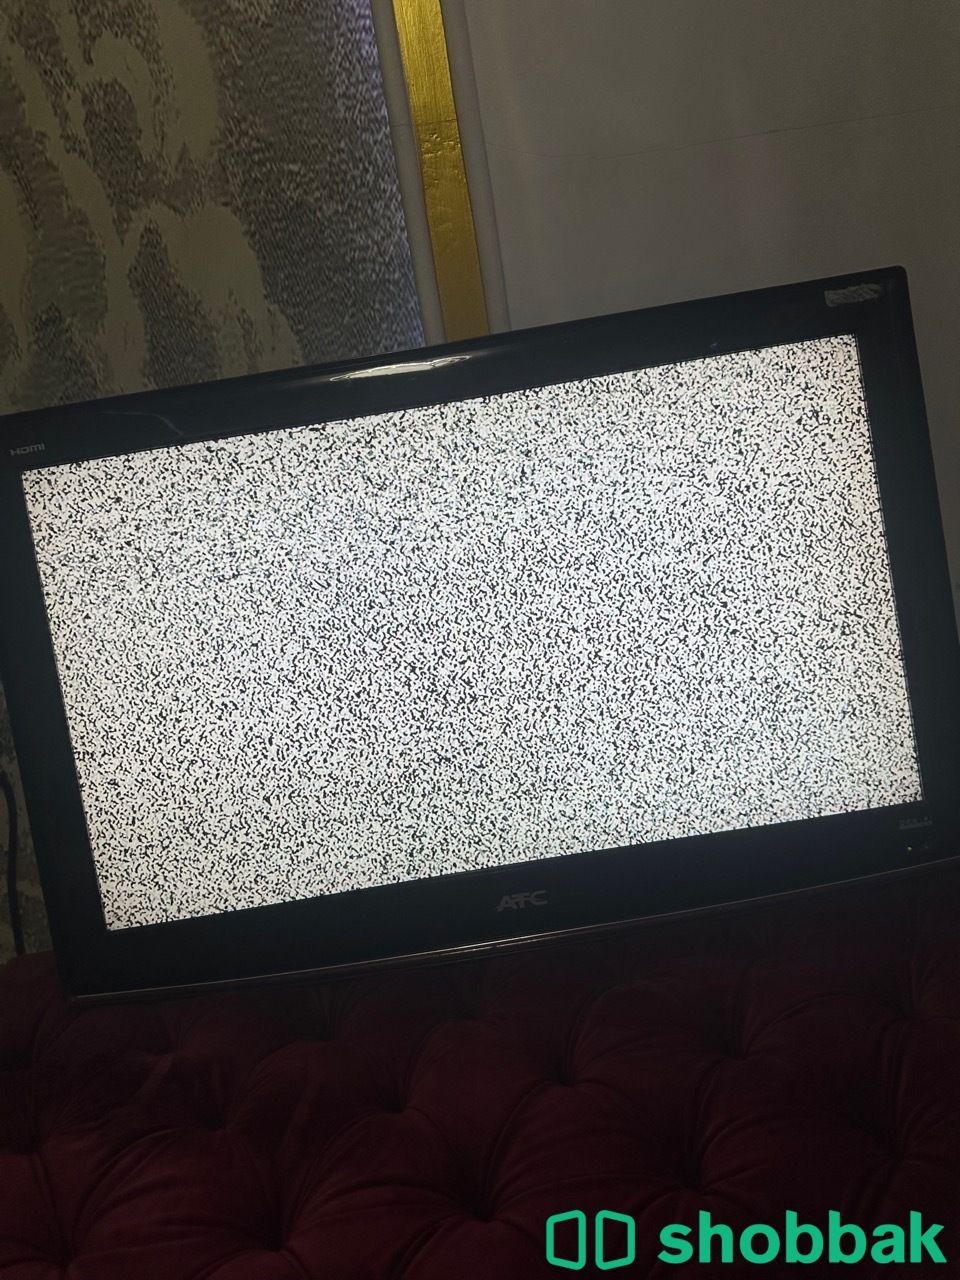 تلفزيون LCD اسود Shobbak Saudi Arabia